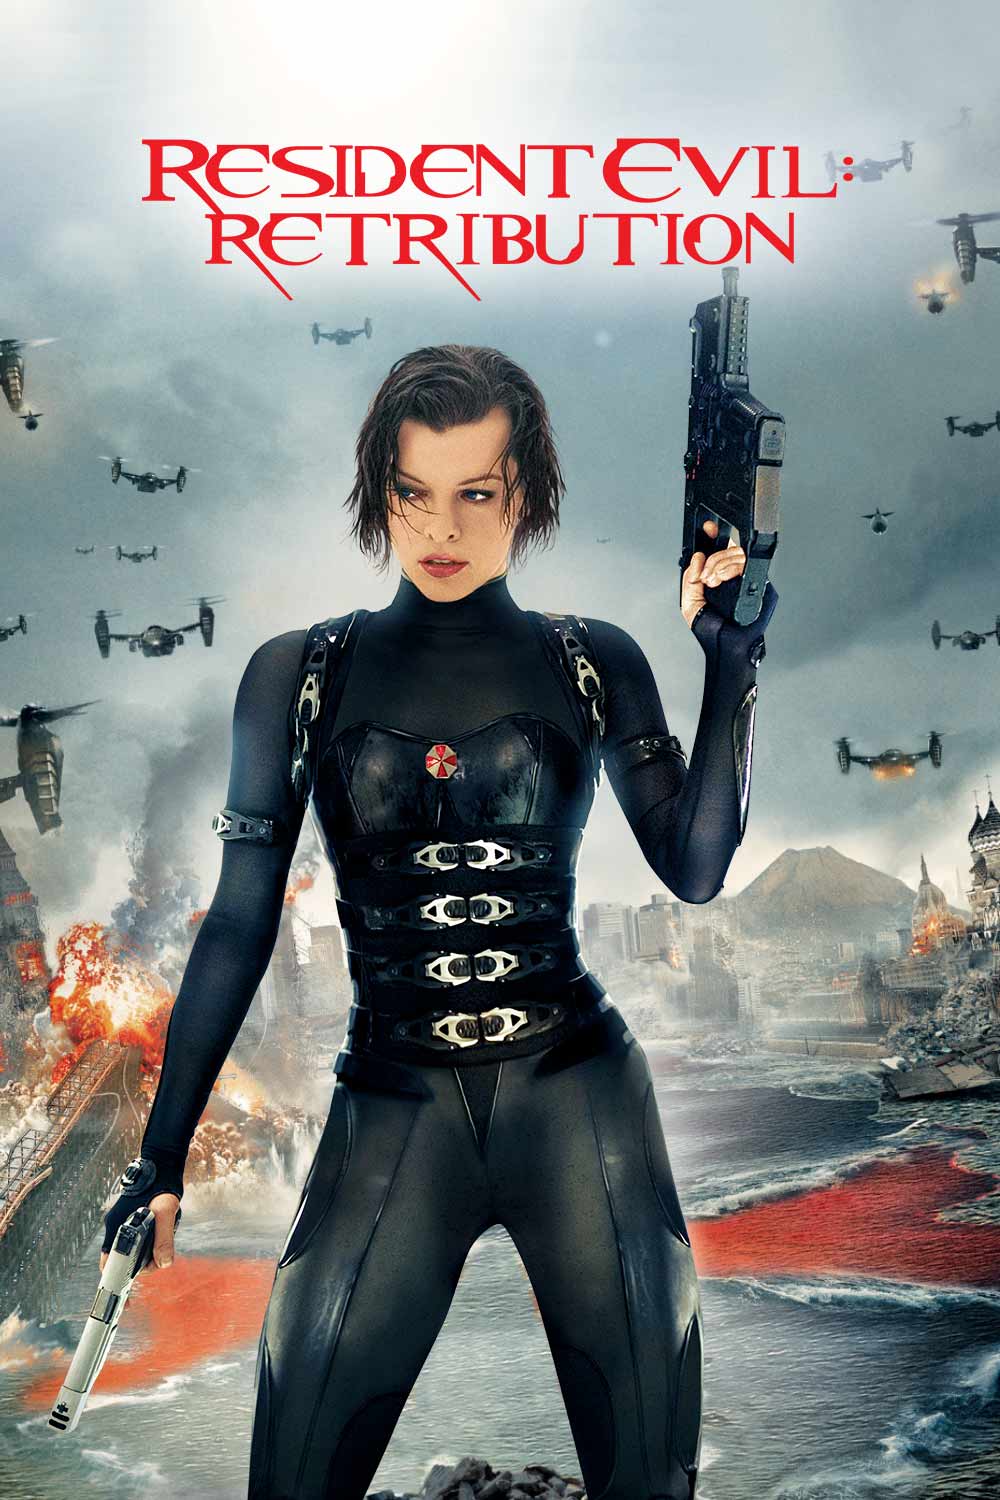 Resident evil 3 movie download in telugu